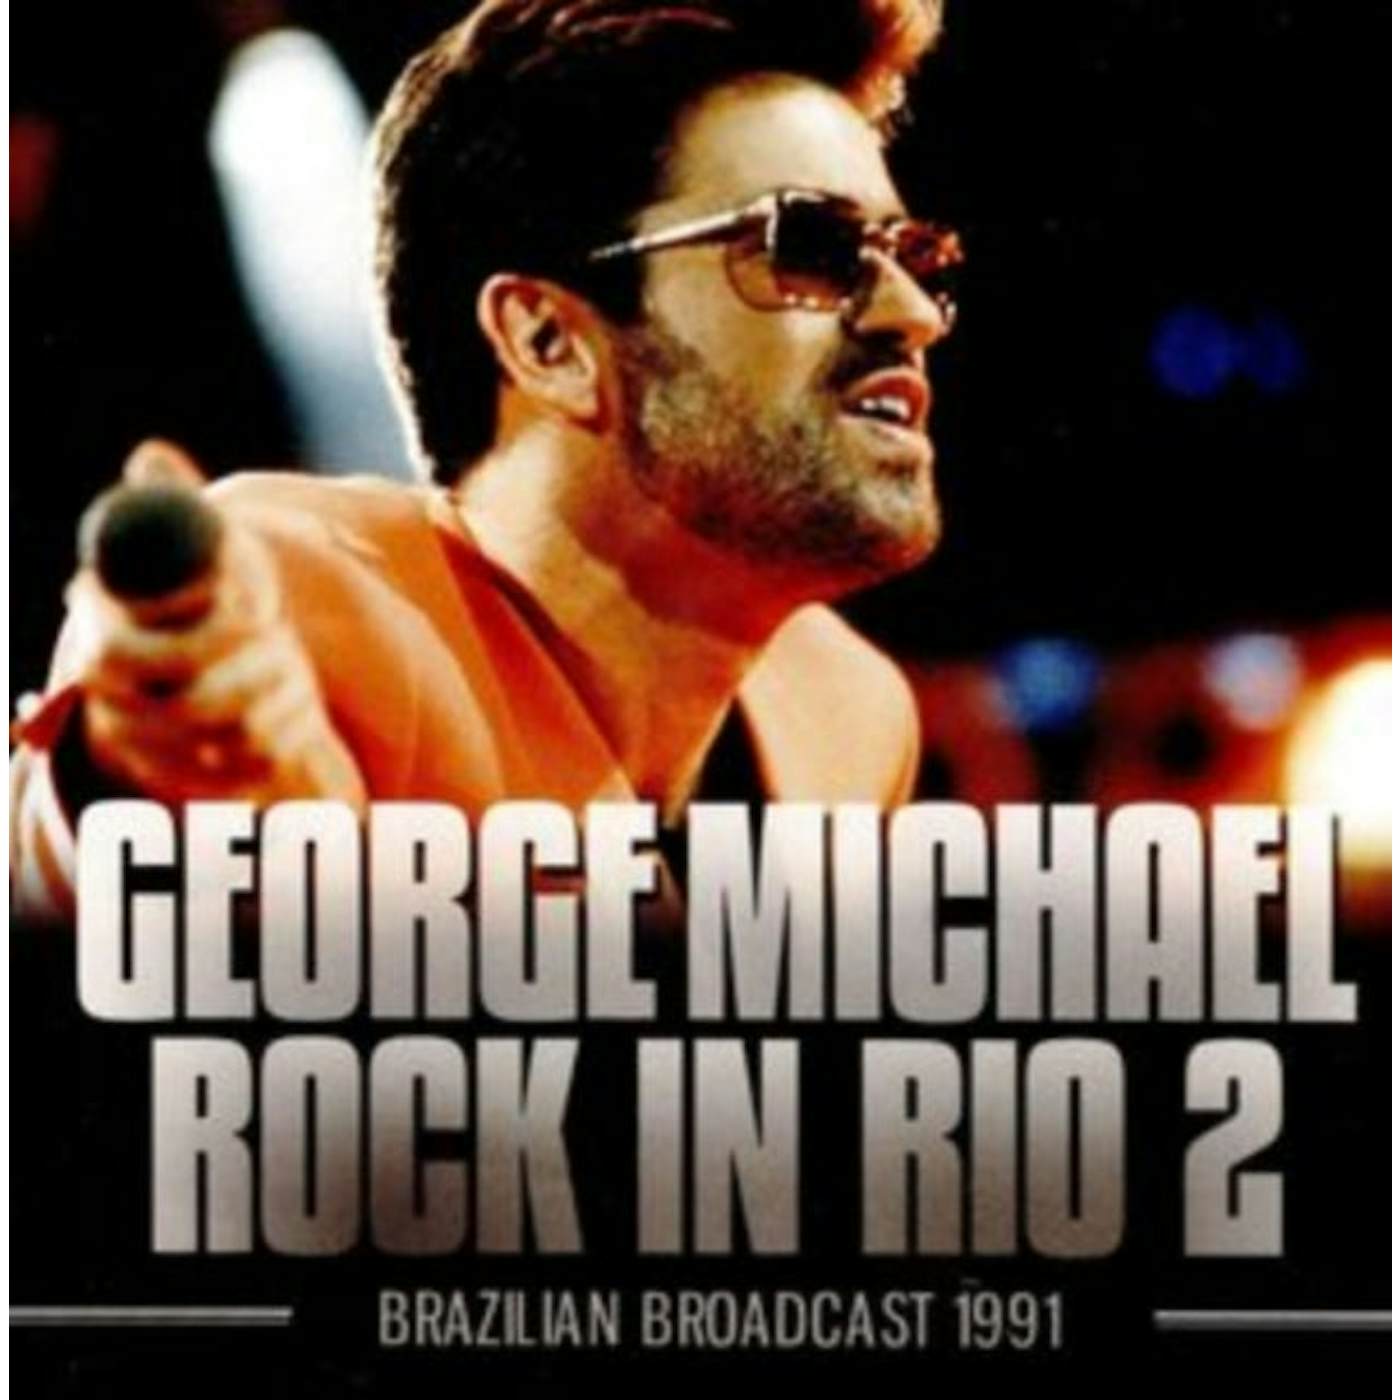 George Michael CD - Rock In Rio 2